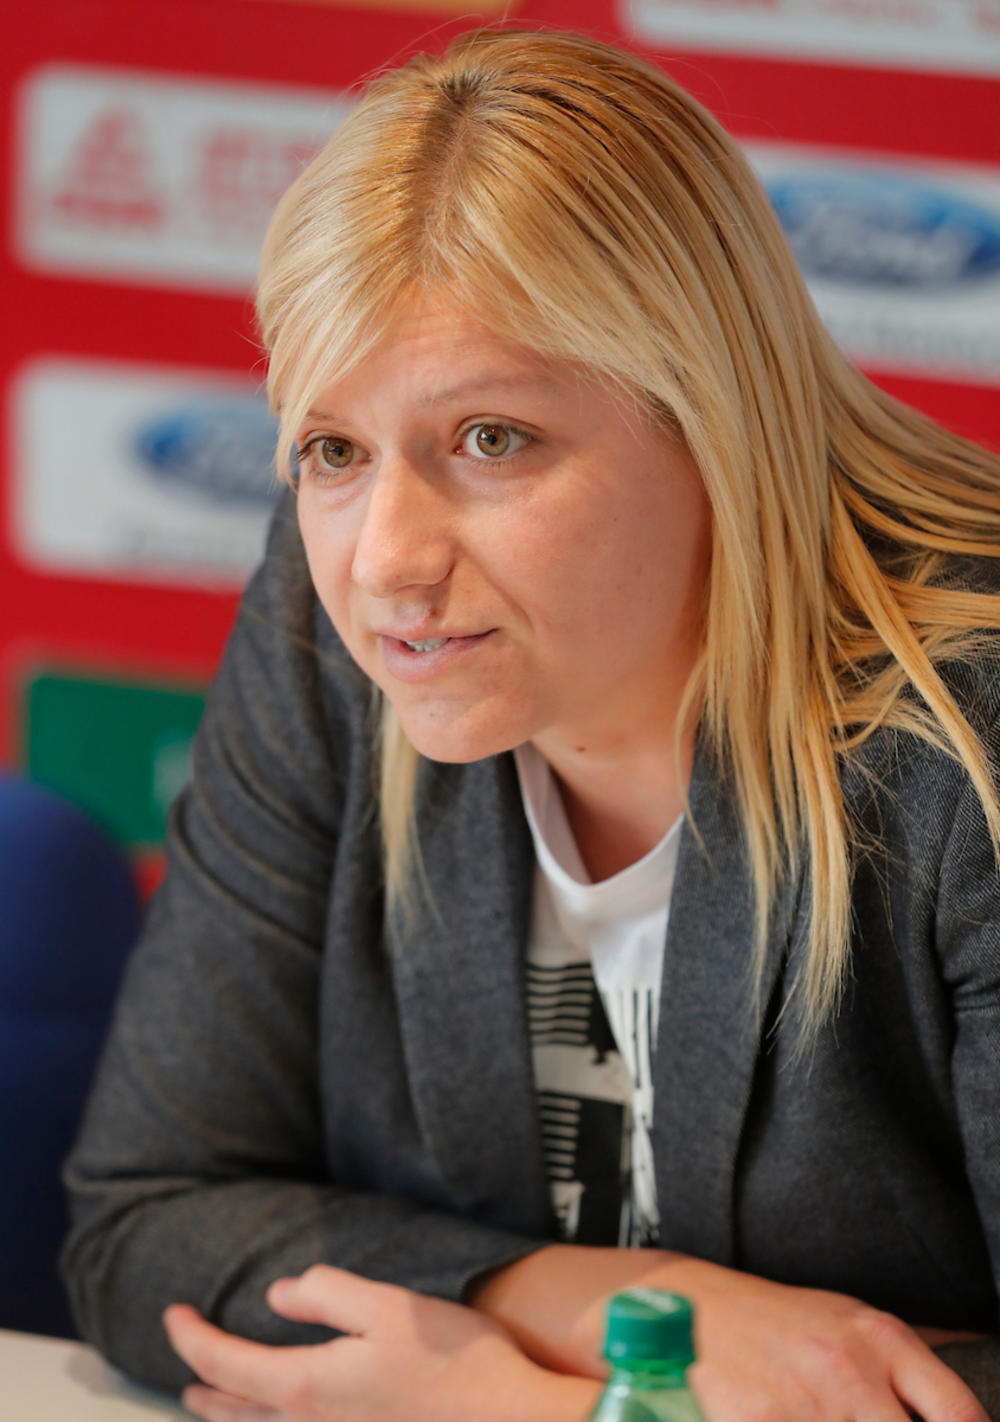 Ana Joković